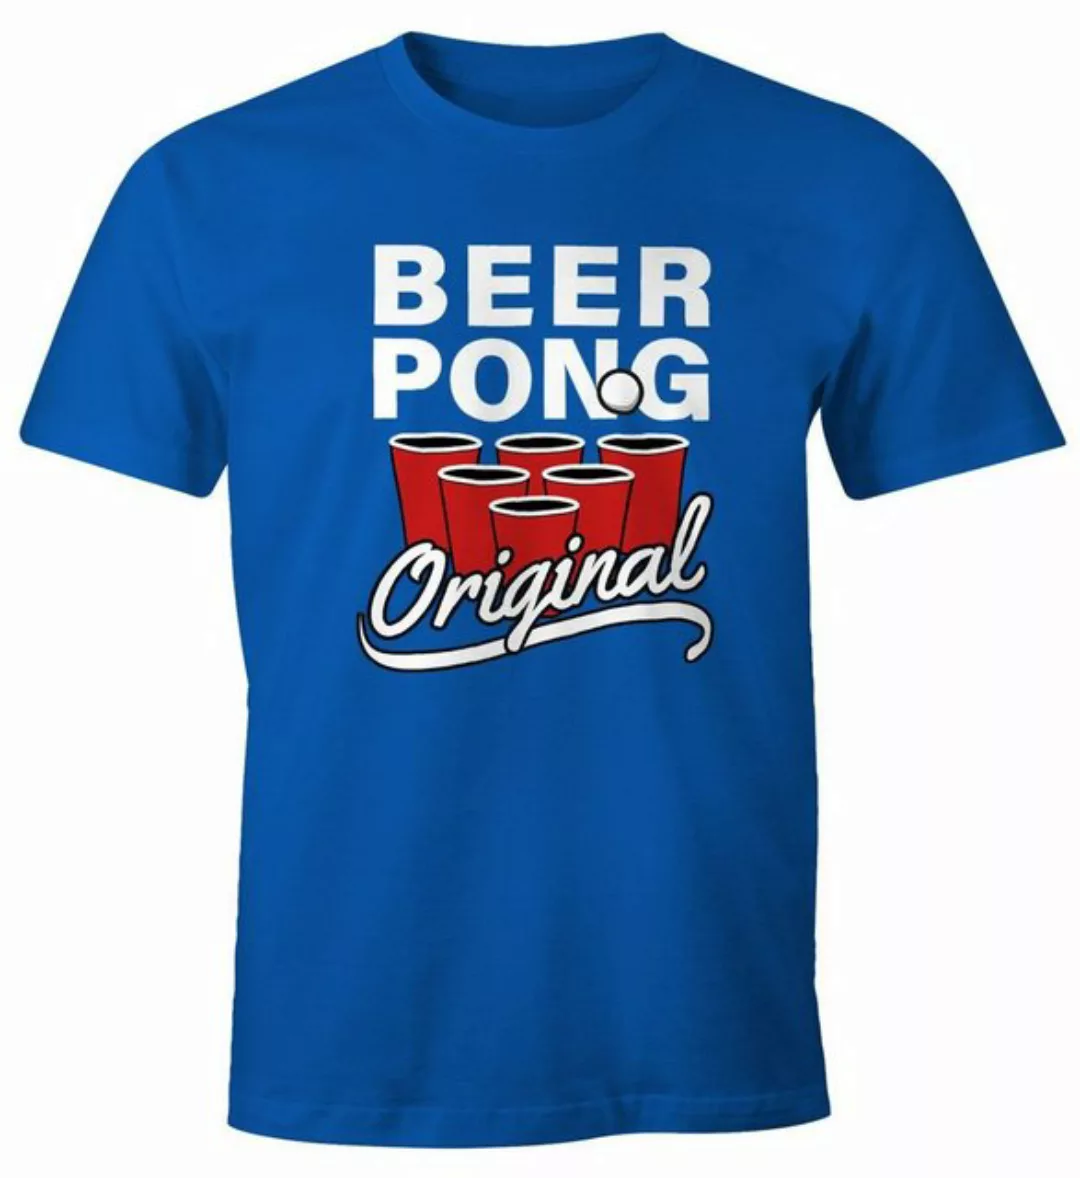 MoonWorks Print-Shirt Herren T-Shirt Beer Pong Original Bier Fun-Shirt Moon günstig online kaufen